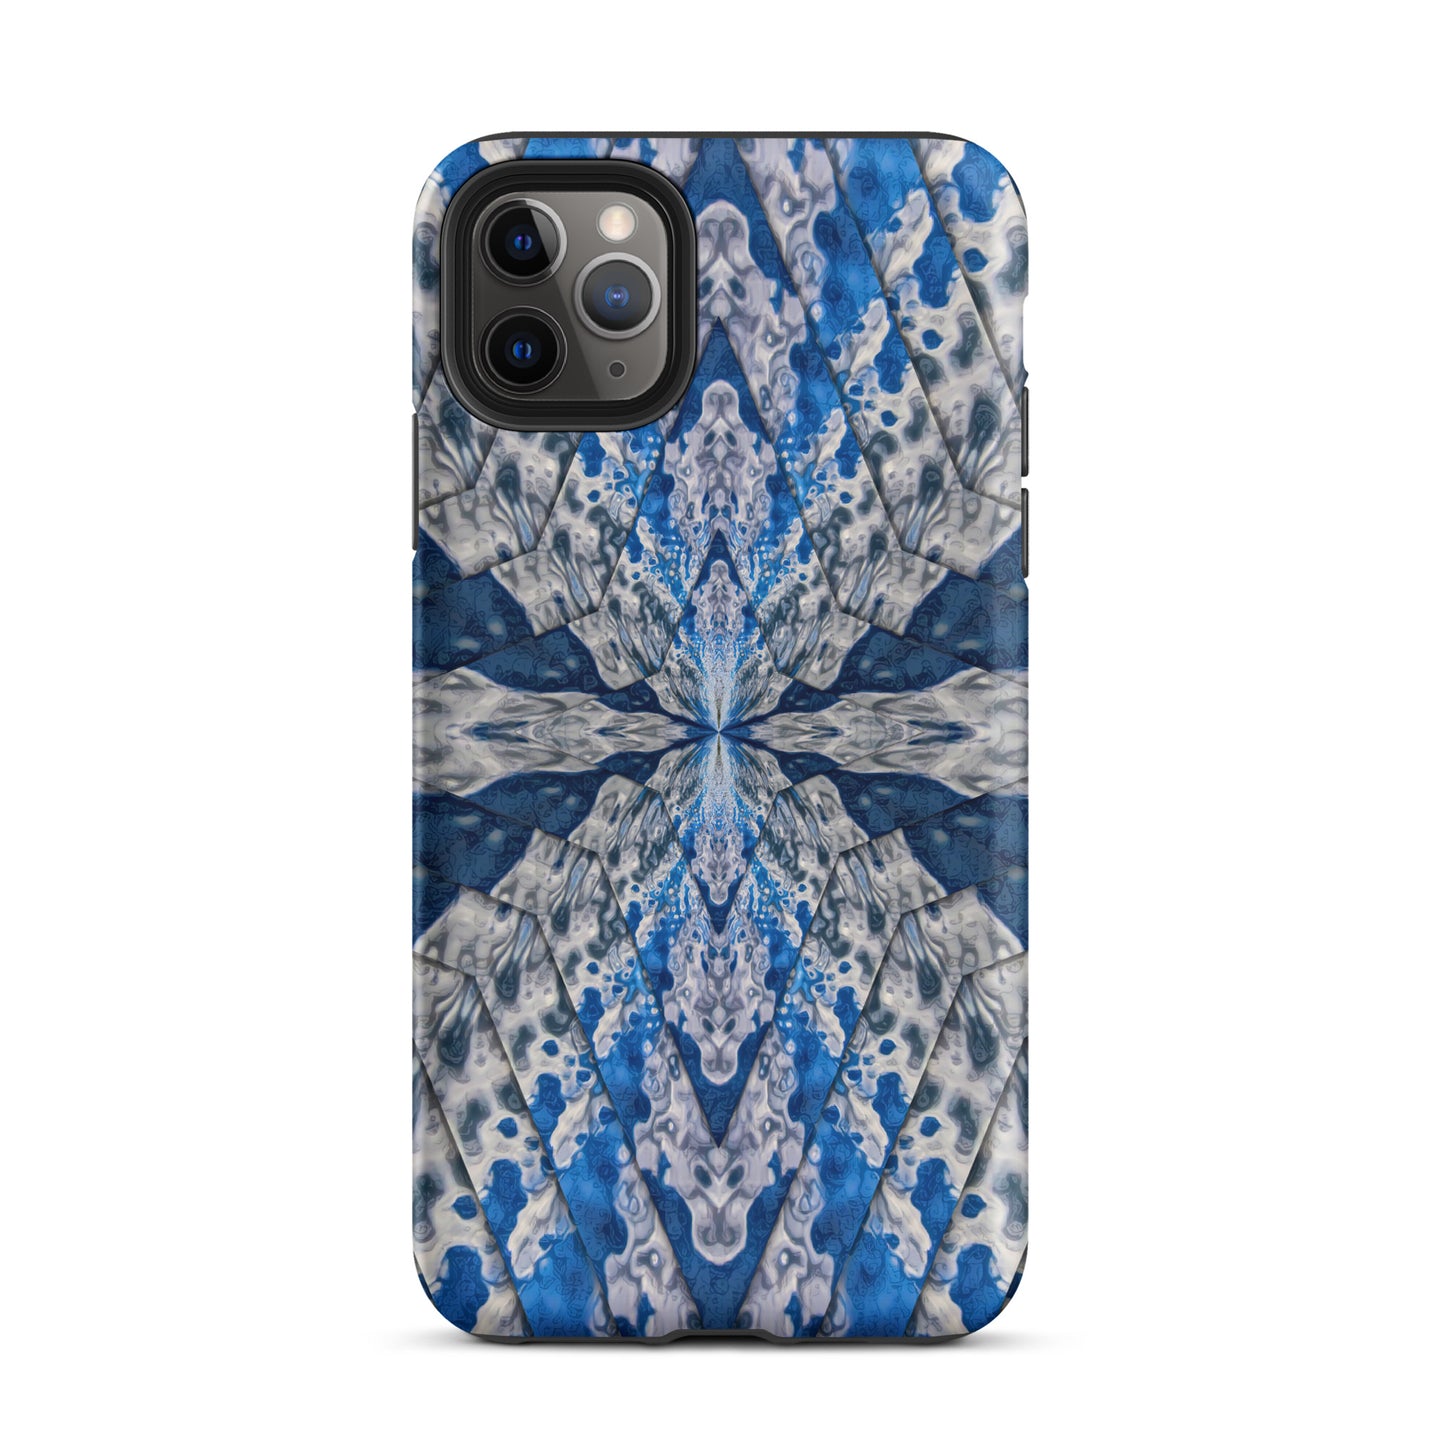 "Aqua Math" Tough iPhone case